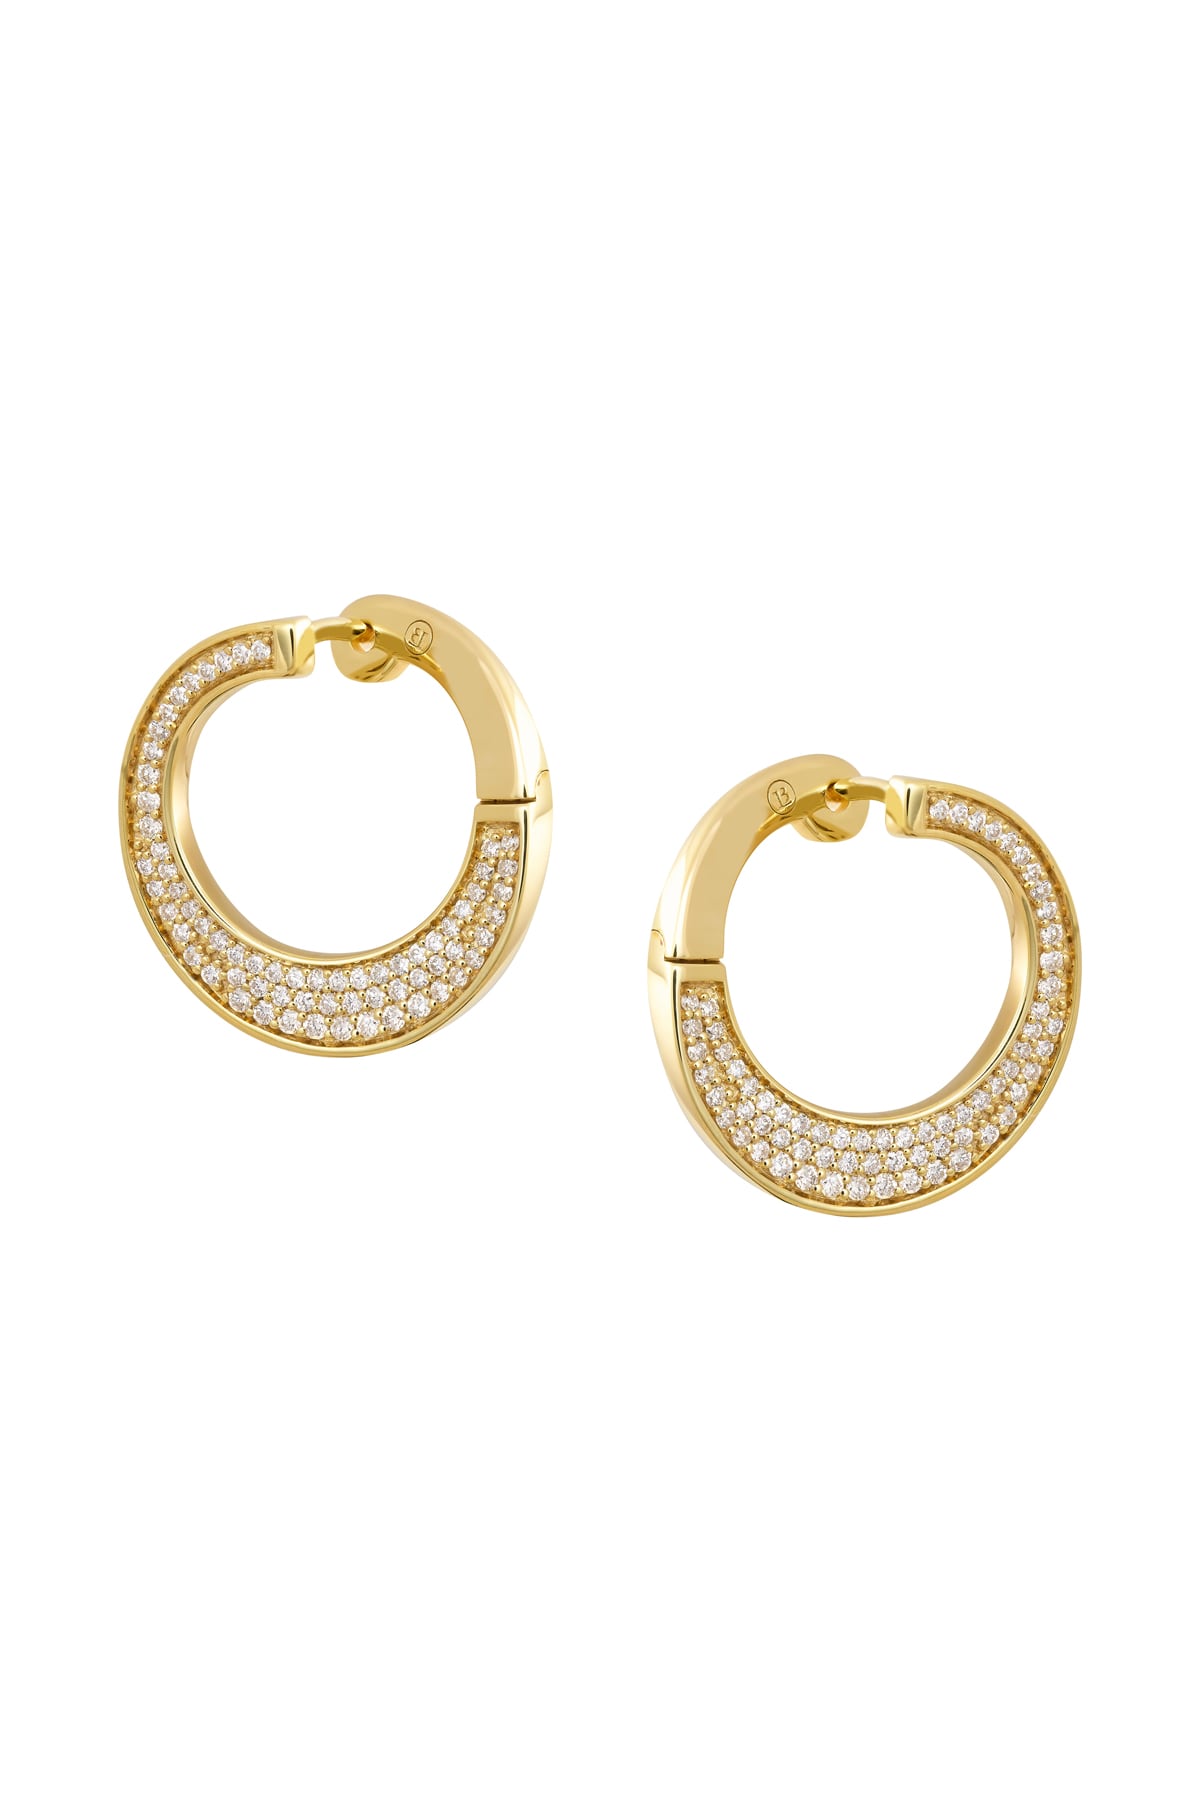 Yellow Gold Fancy Round Diamond Hoop Earrings from LeGassick Jewellery.